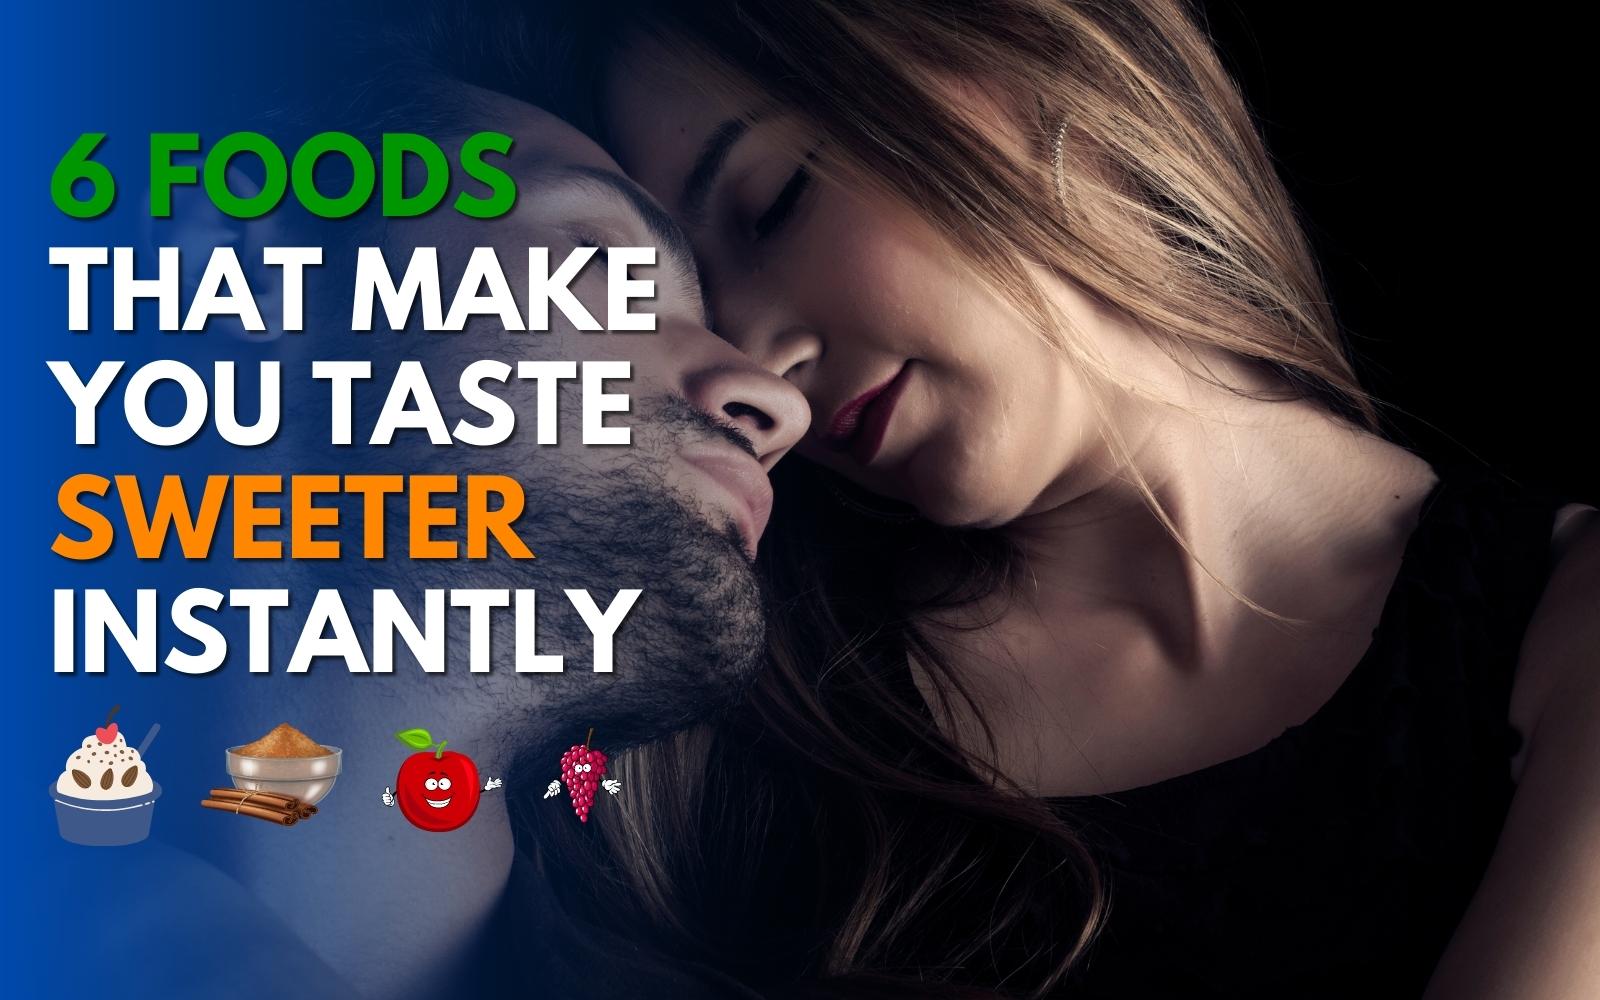 6 Foods That Make You Taste Sweeter